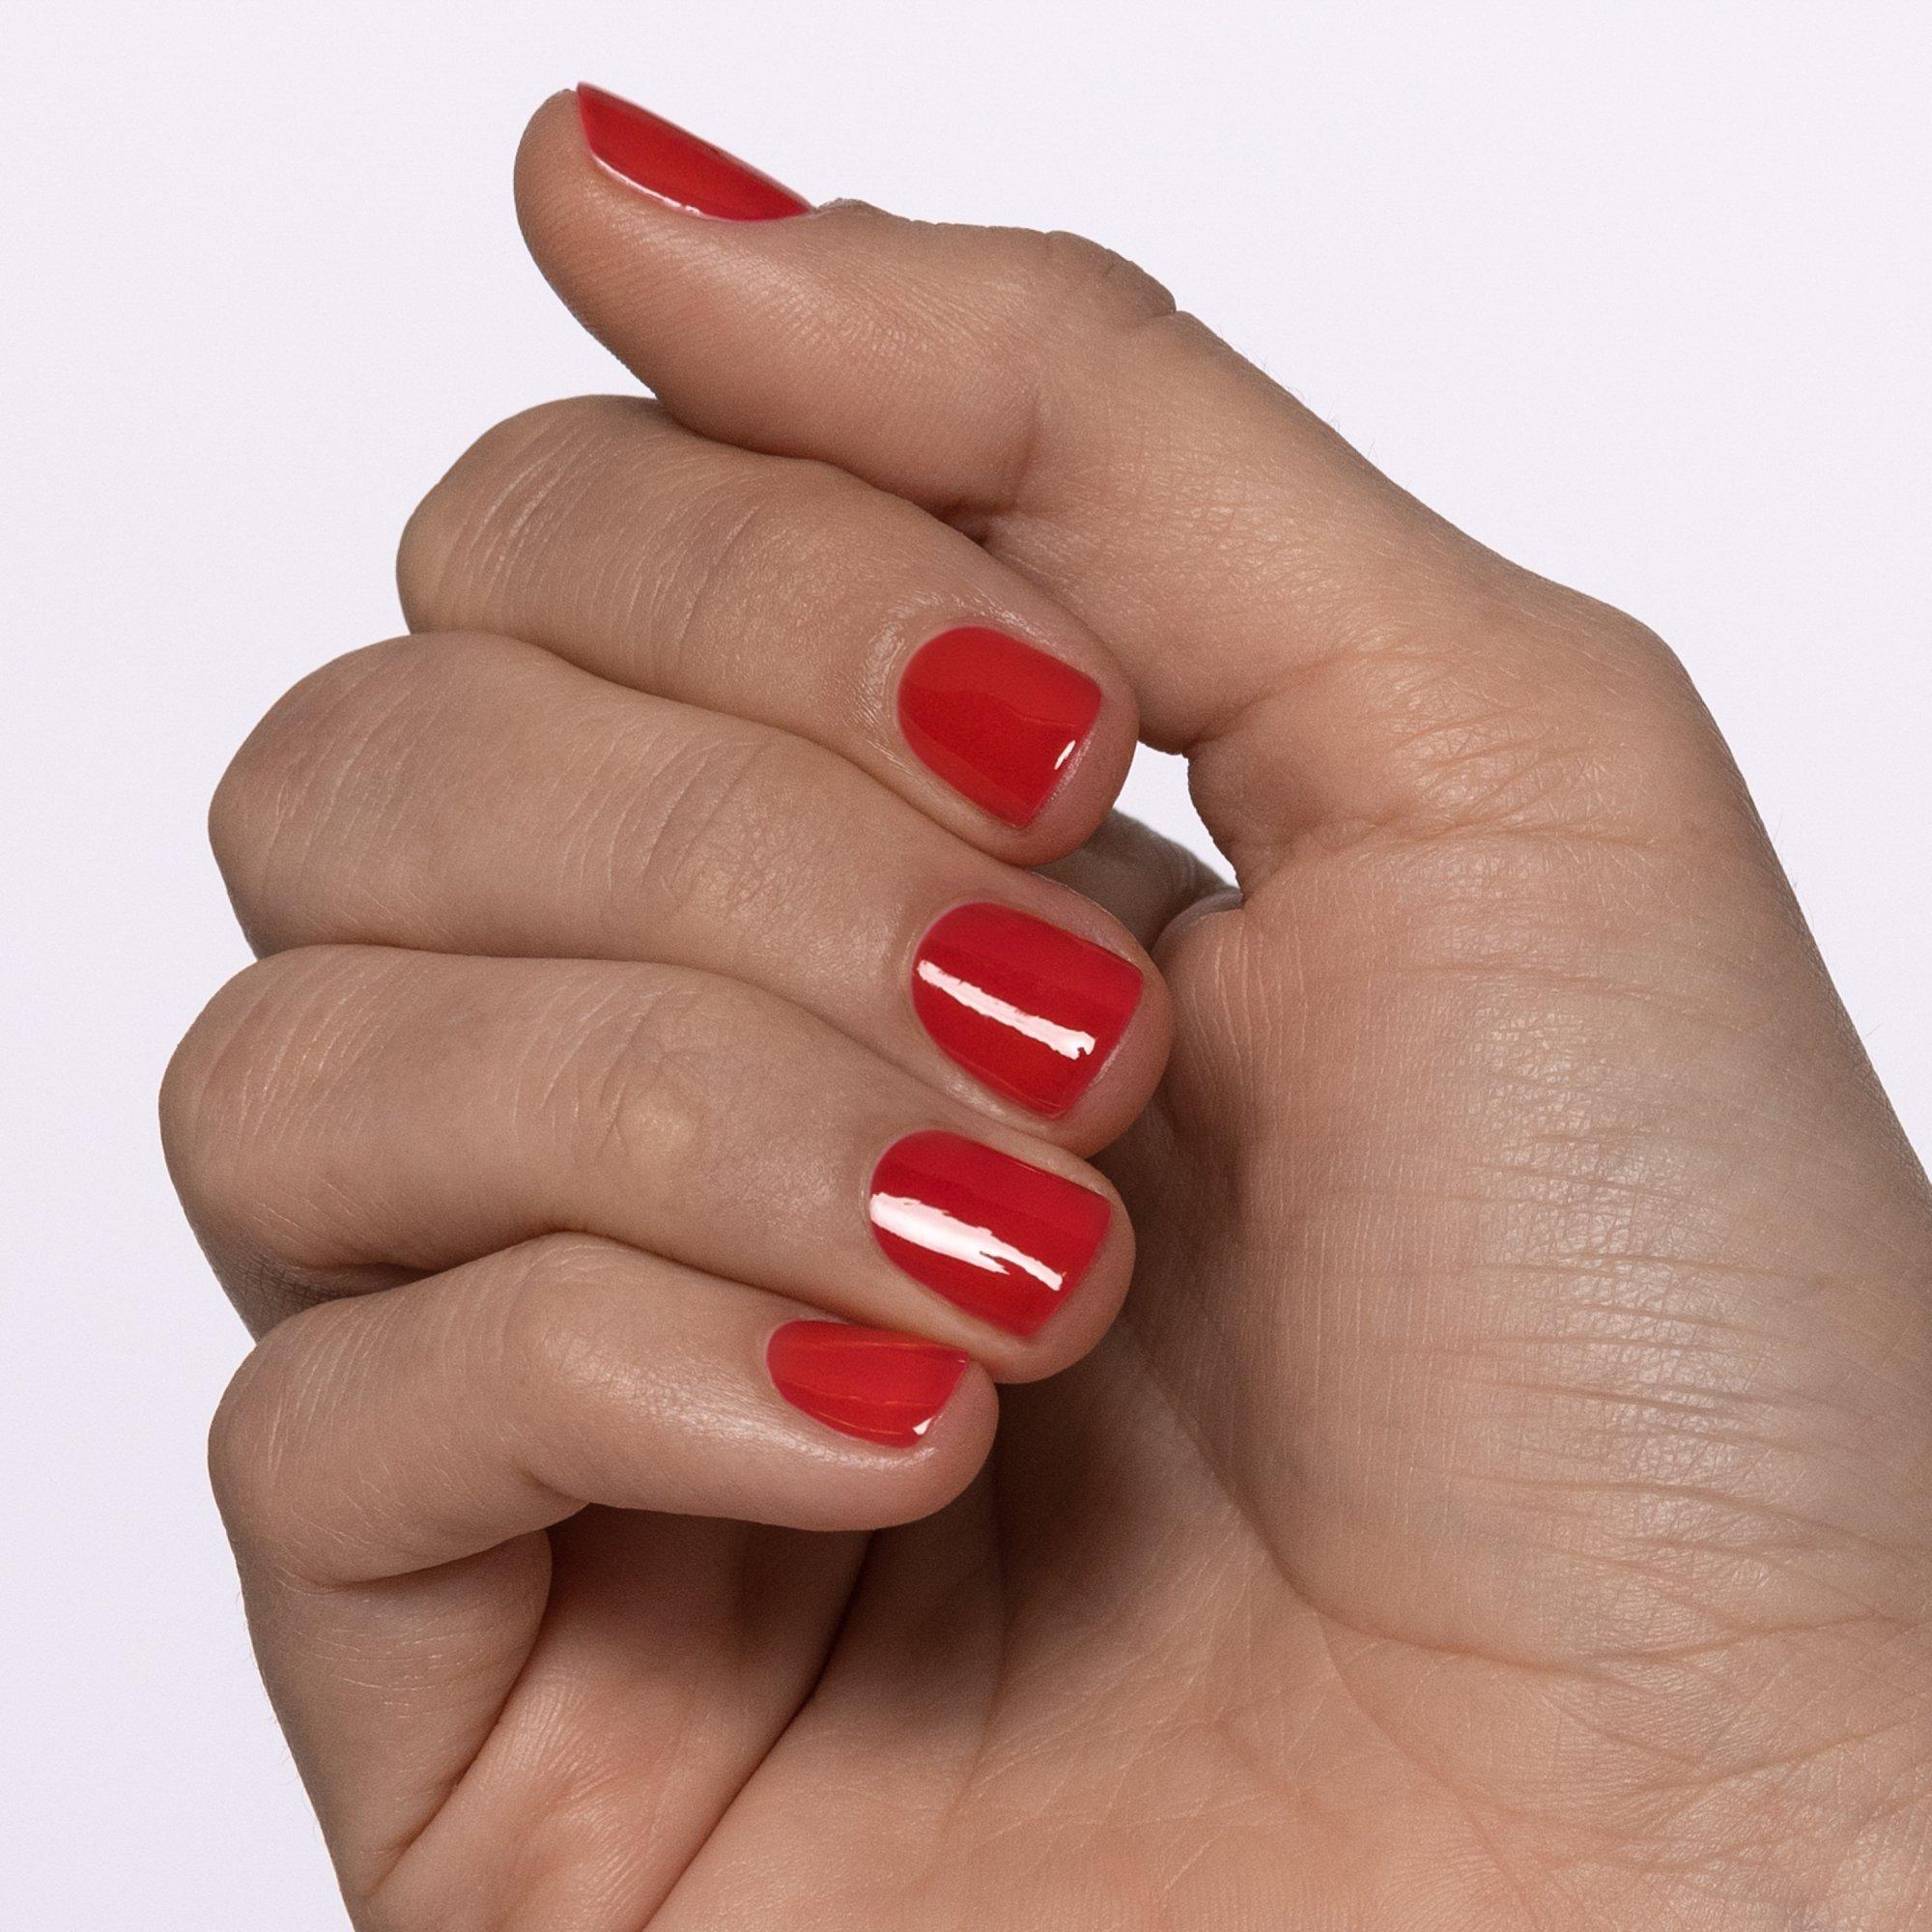 glossy Jelly nail polish vernis à ongles